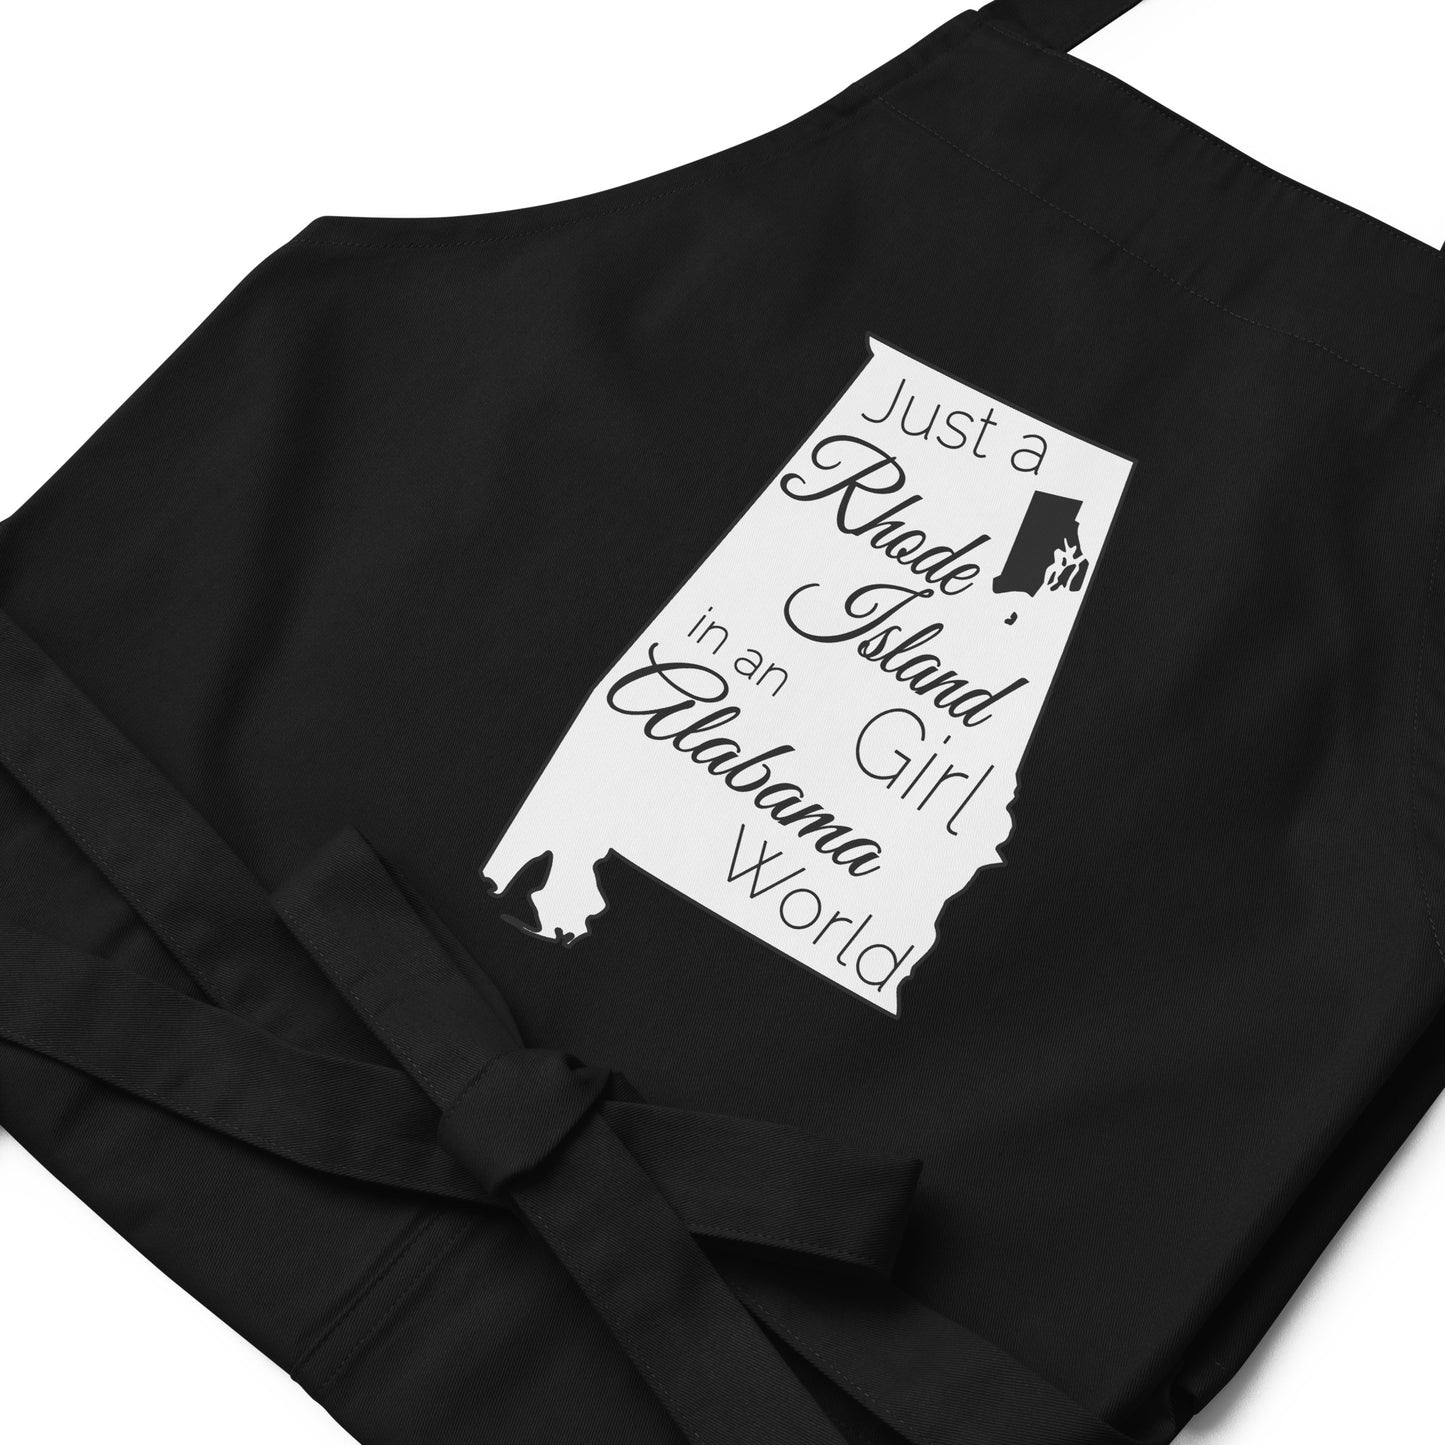 Just a Rhode Island Girl in an Alabama World Organic cotton apron